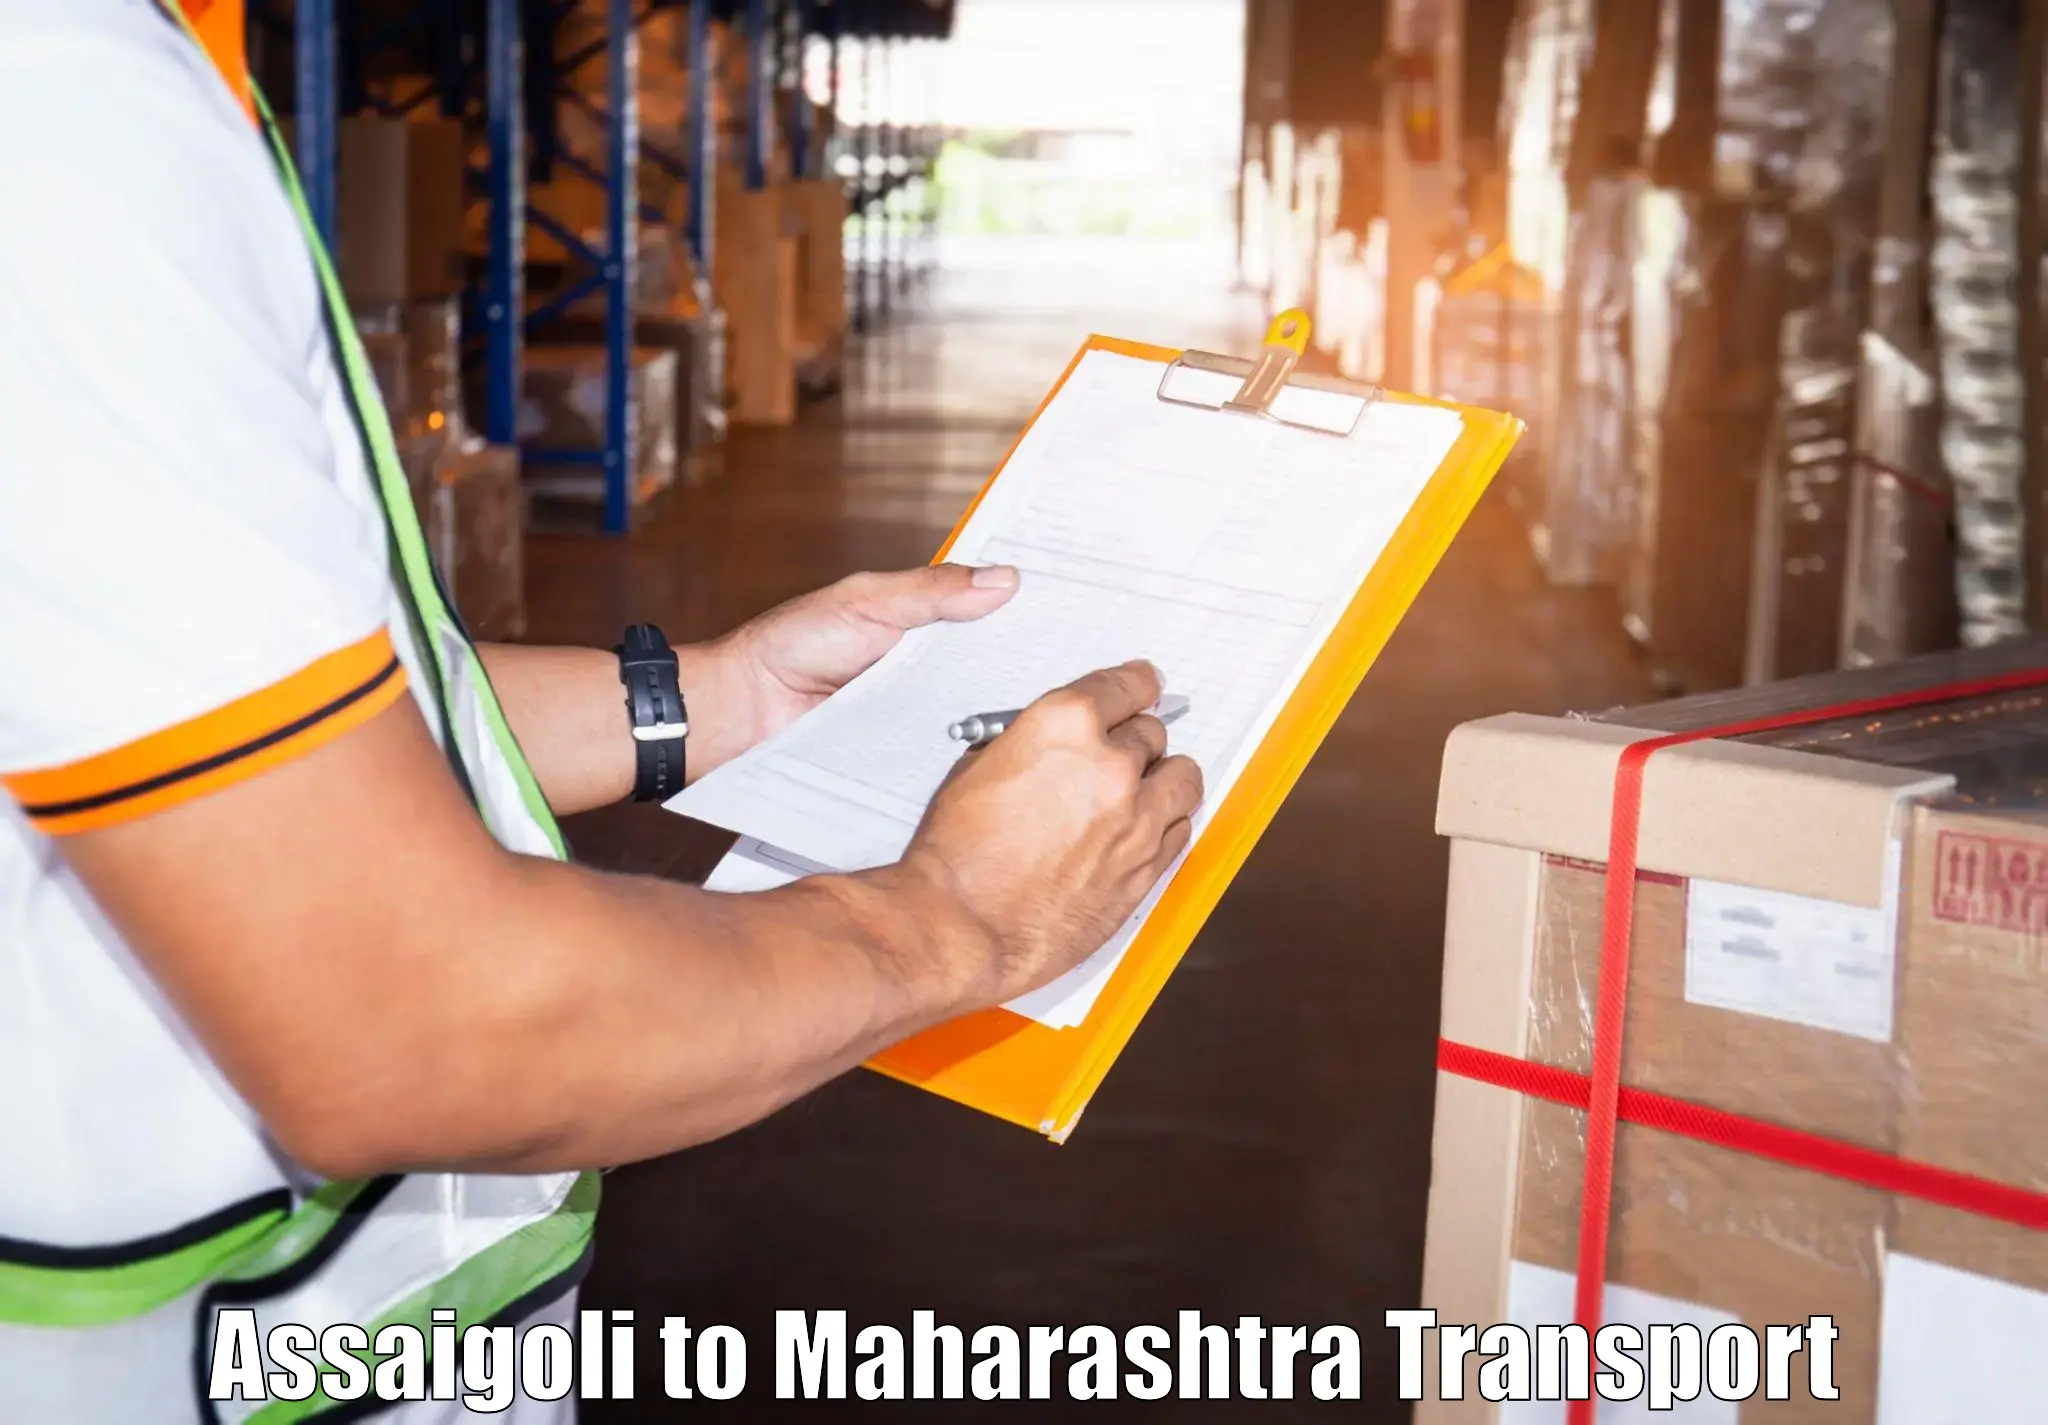 Truck transport companies in India in Assaigoli to Maharashtra